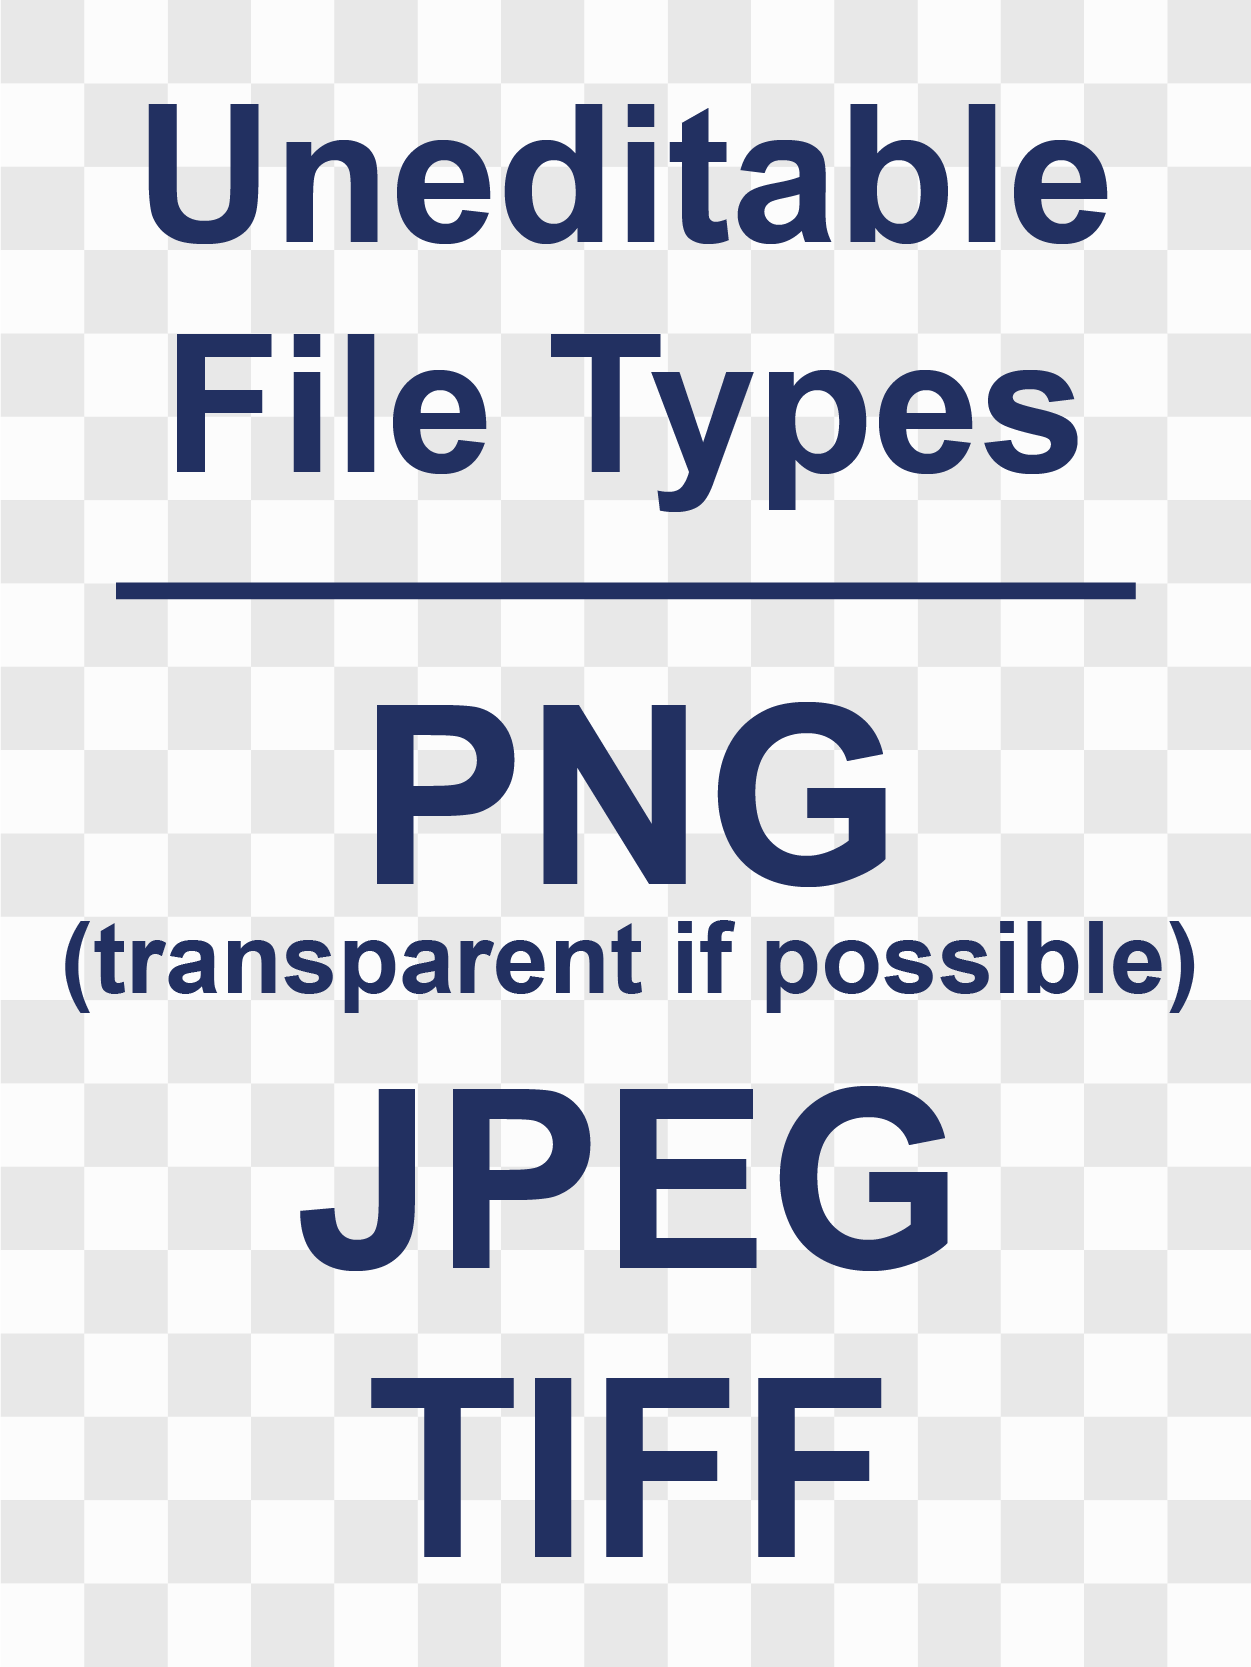 Uneditable file type summary